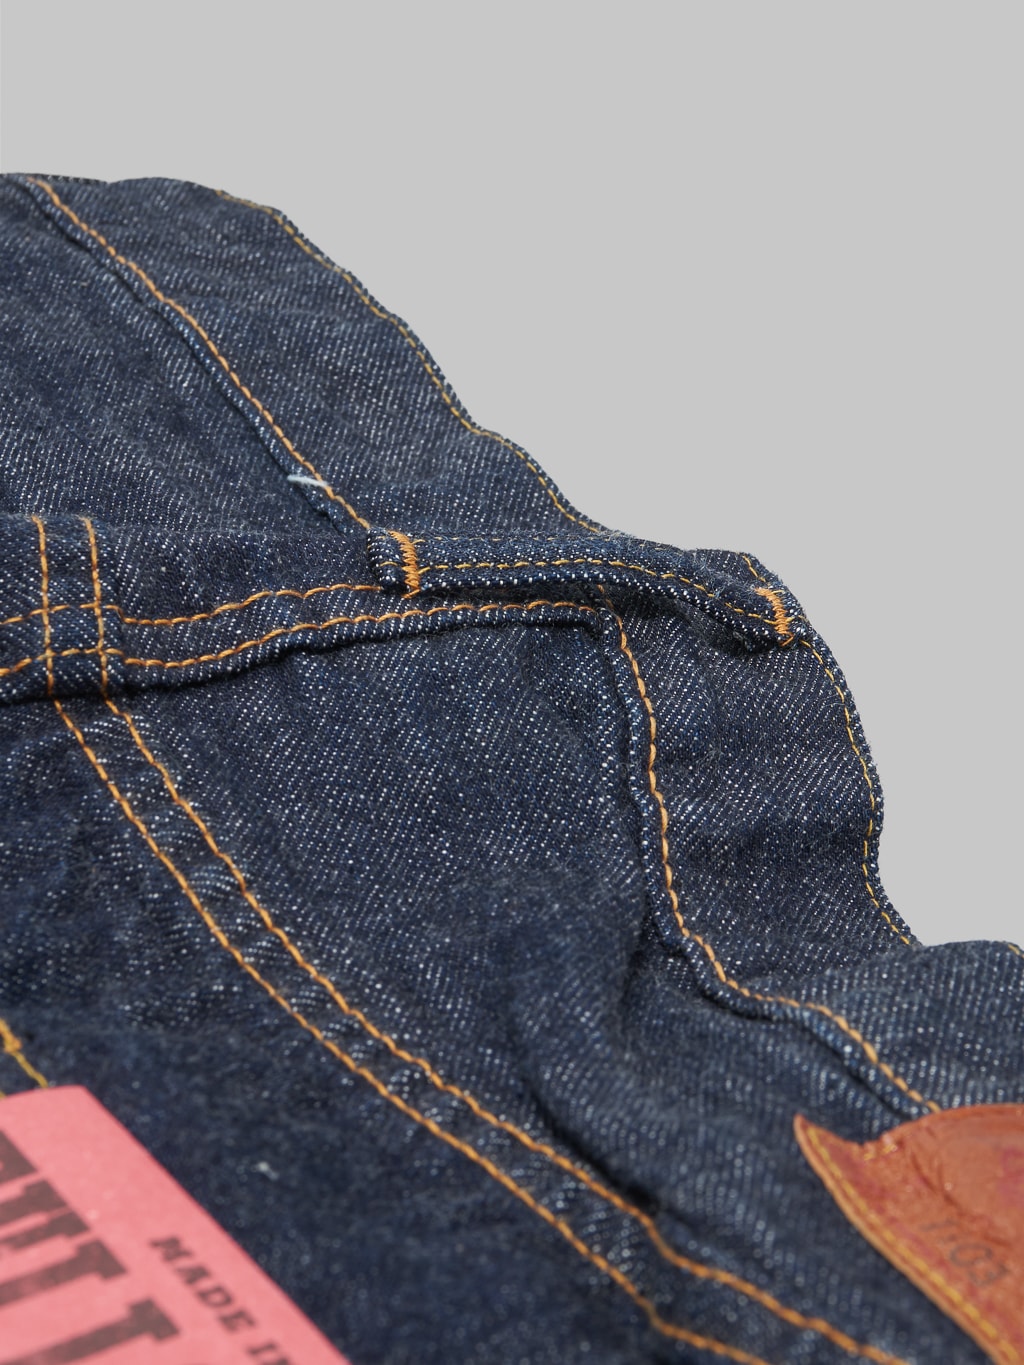 fullcount 1103 clean straight selvedge denim jeans belt loop